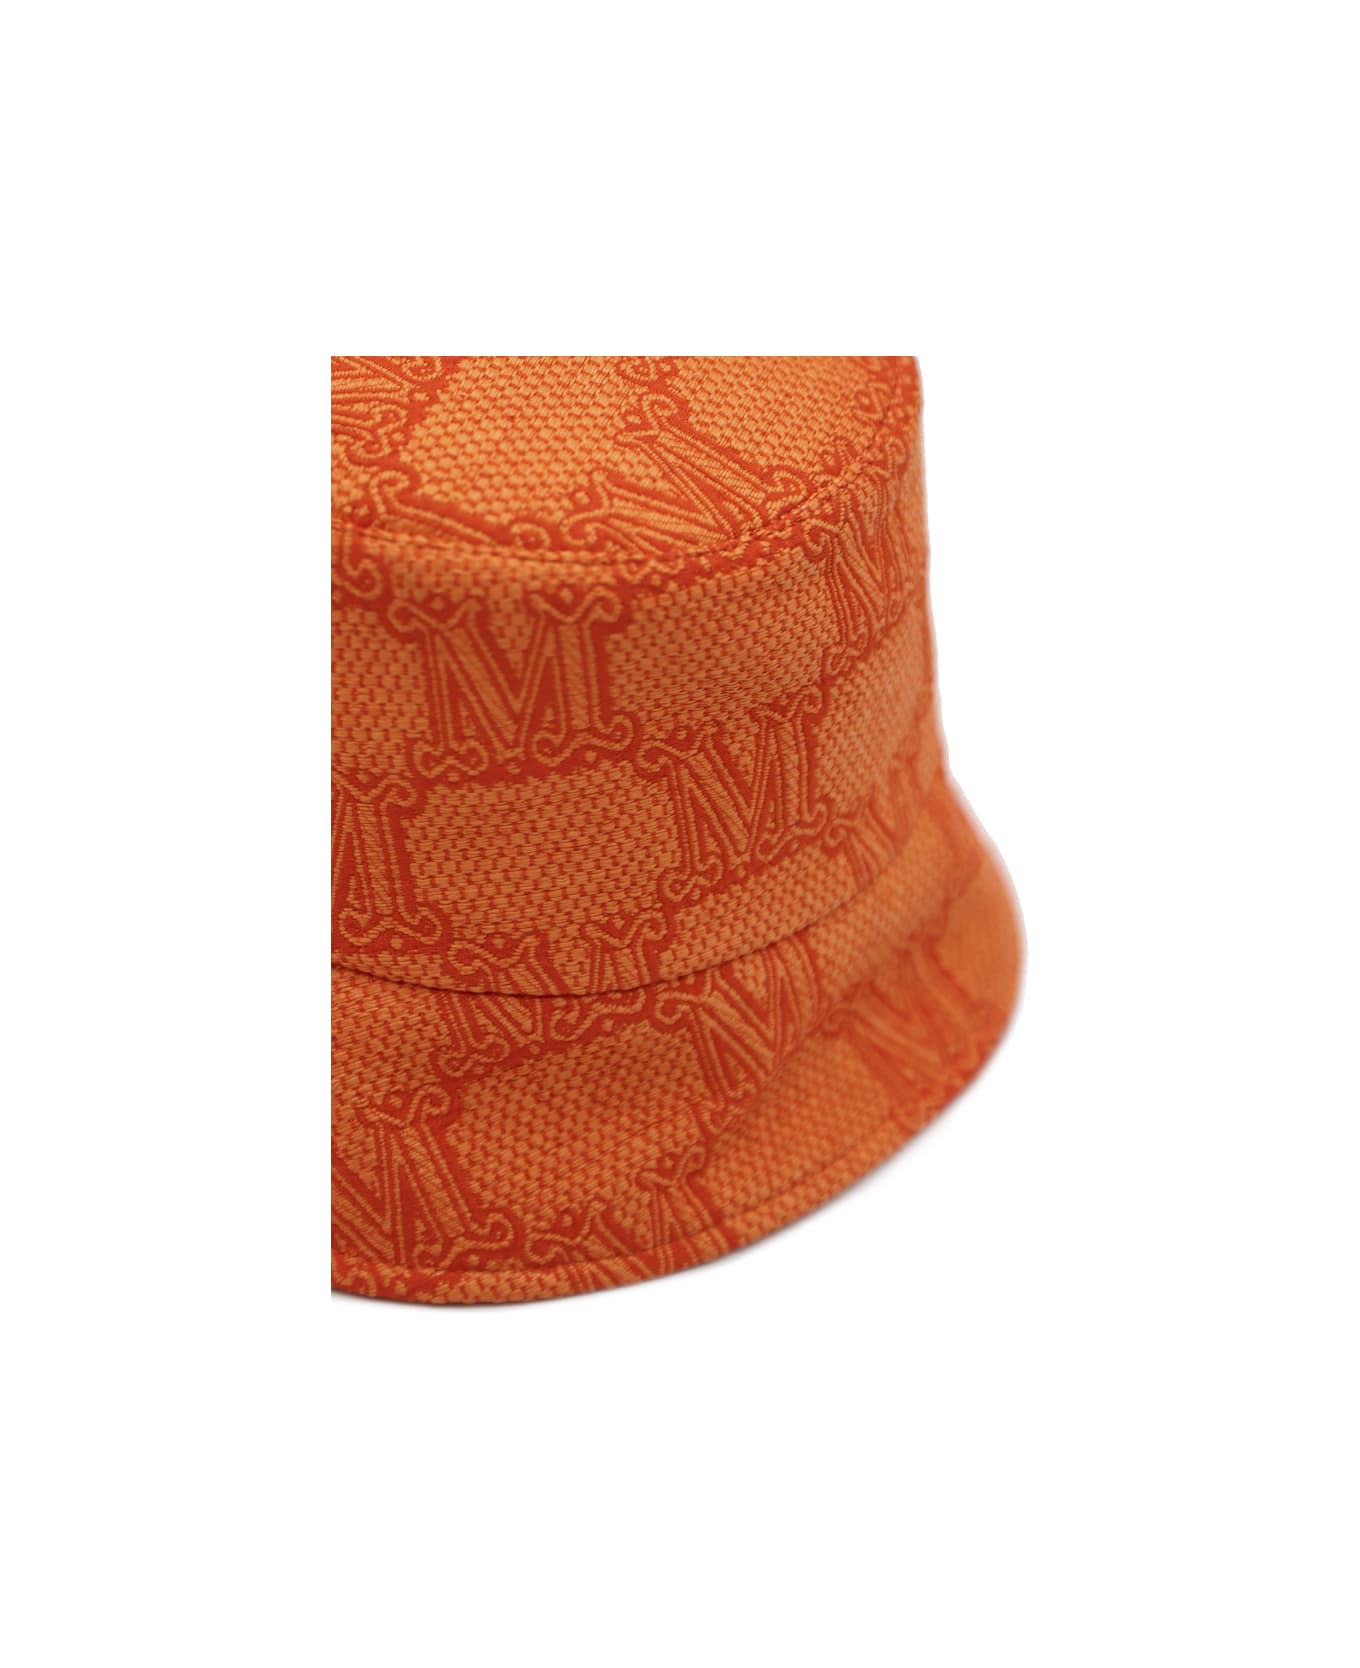 Max Mara Raffia Bucket Hat With All-over Monogram - Orange